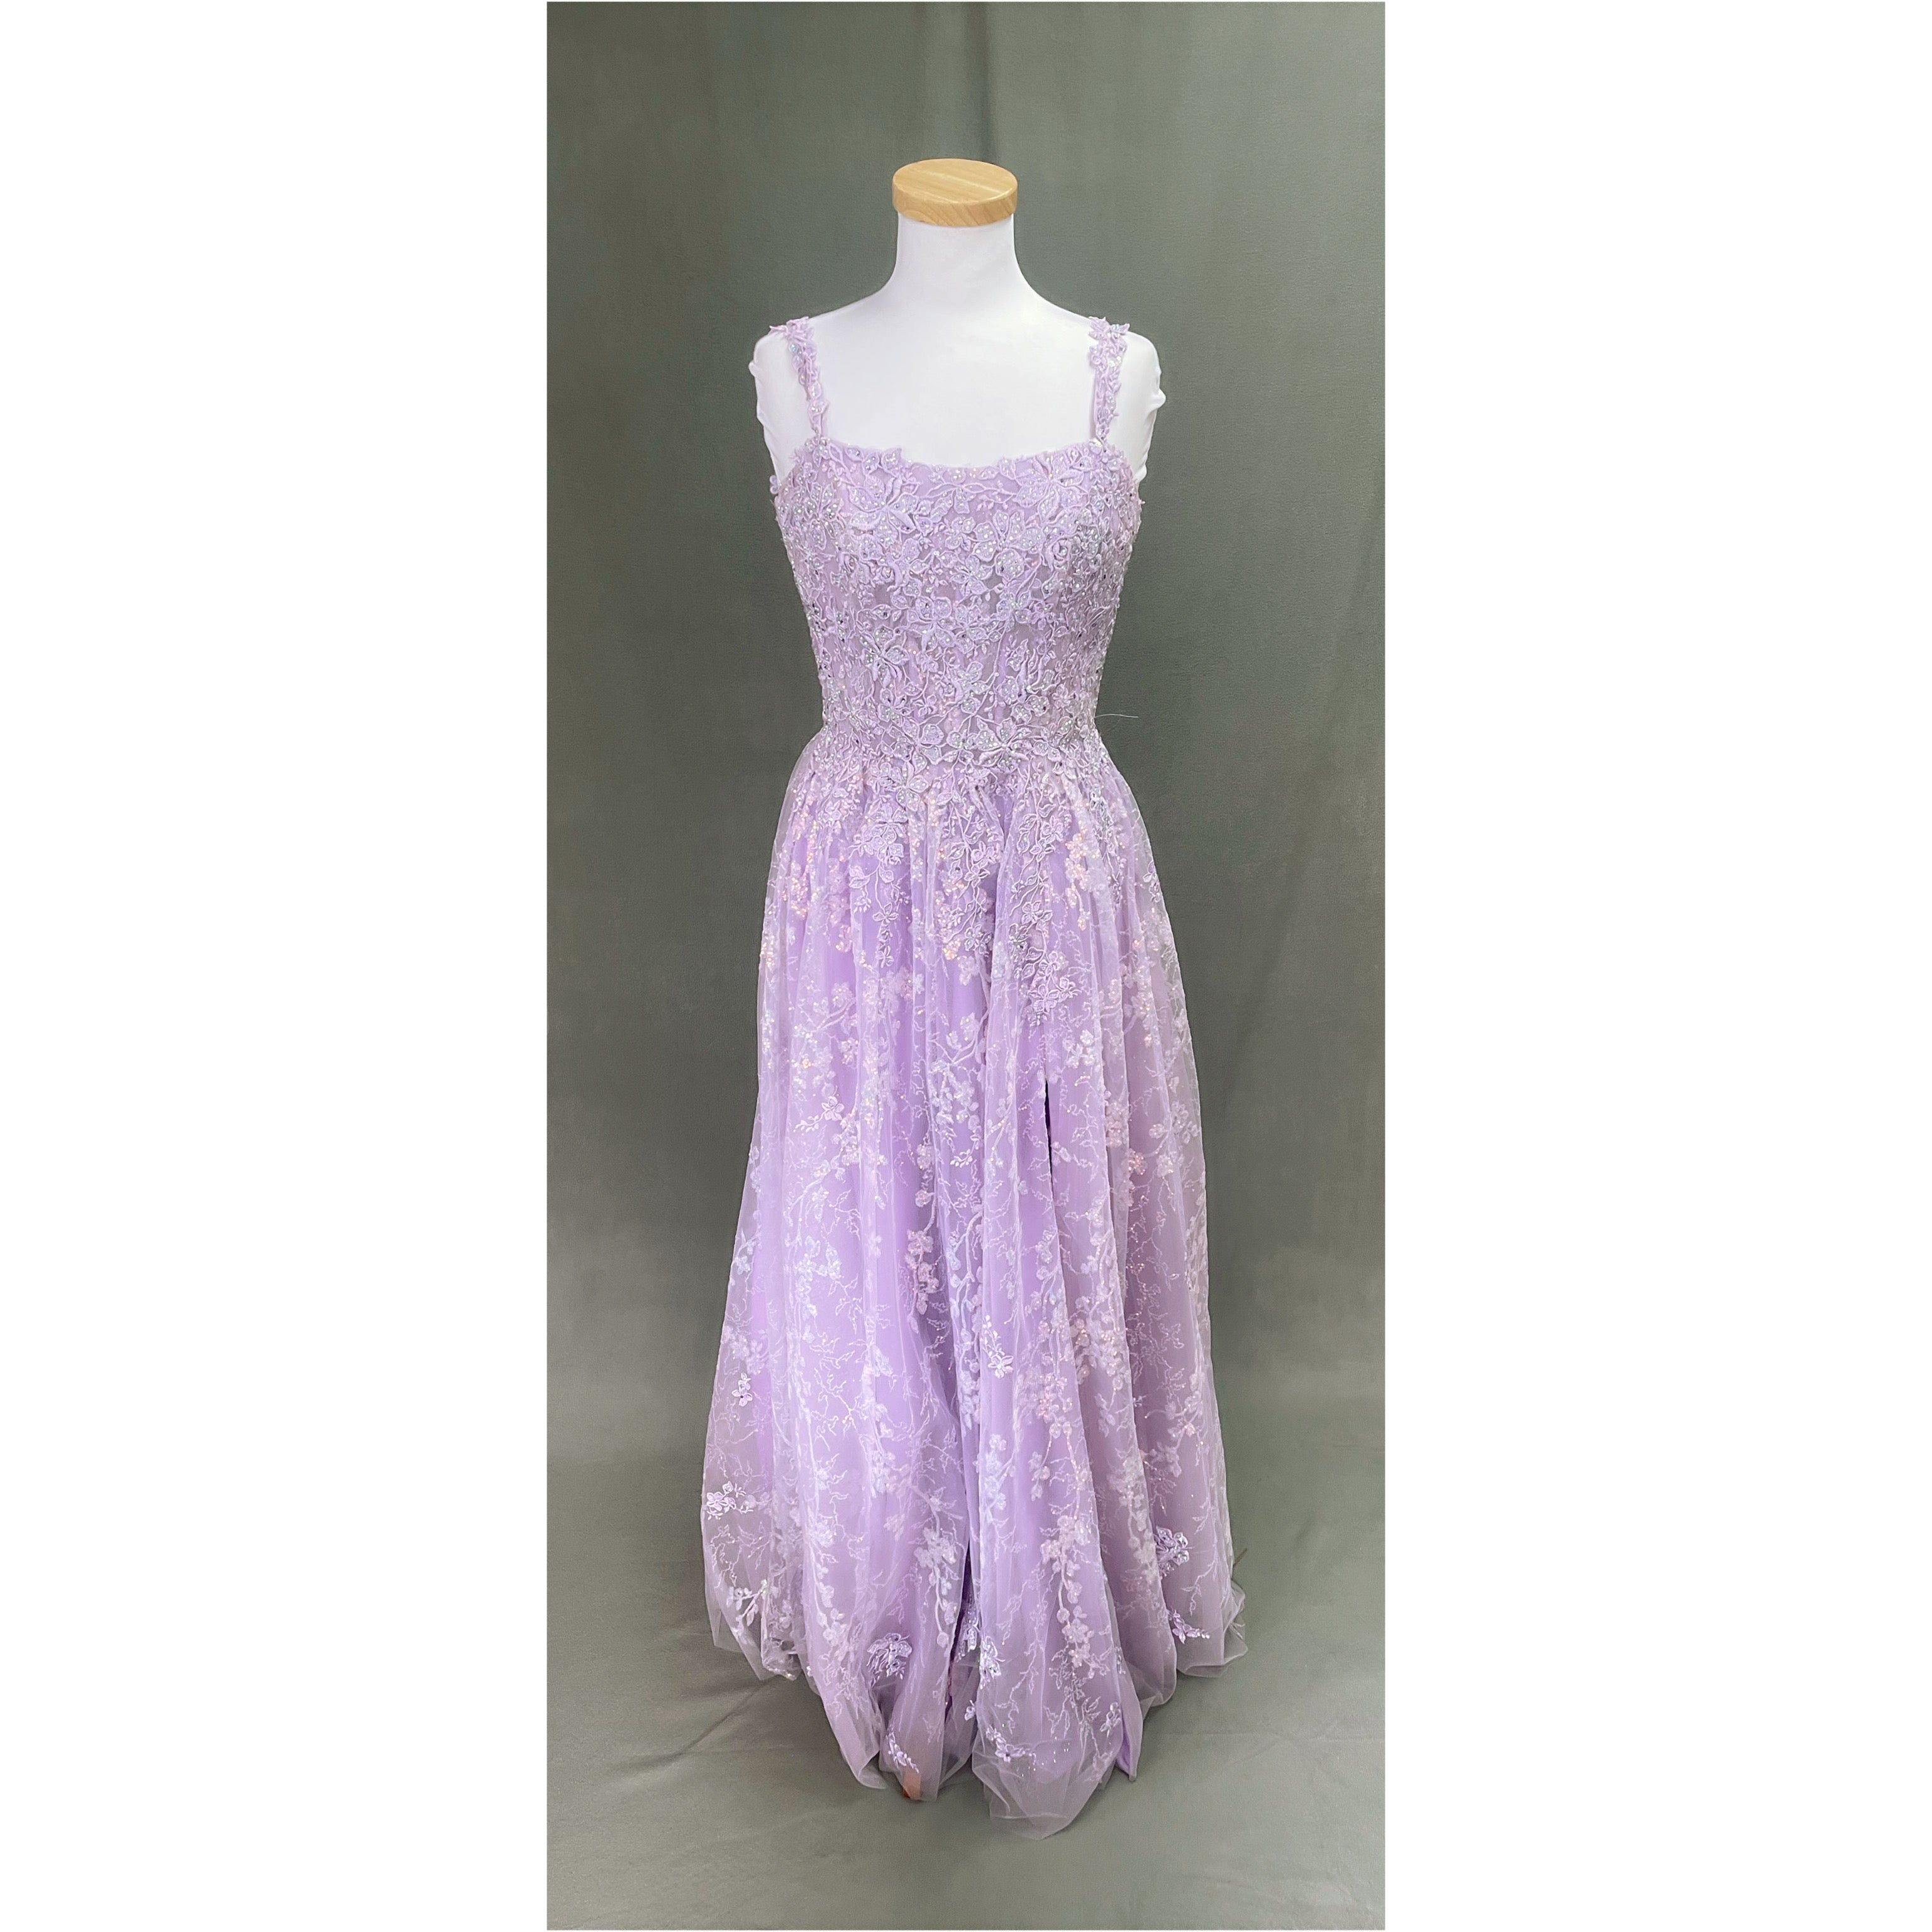 Ella Grace lavender dress, size 8